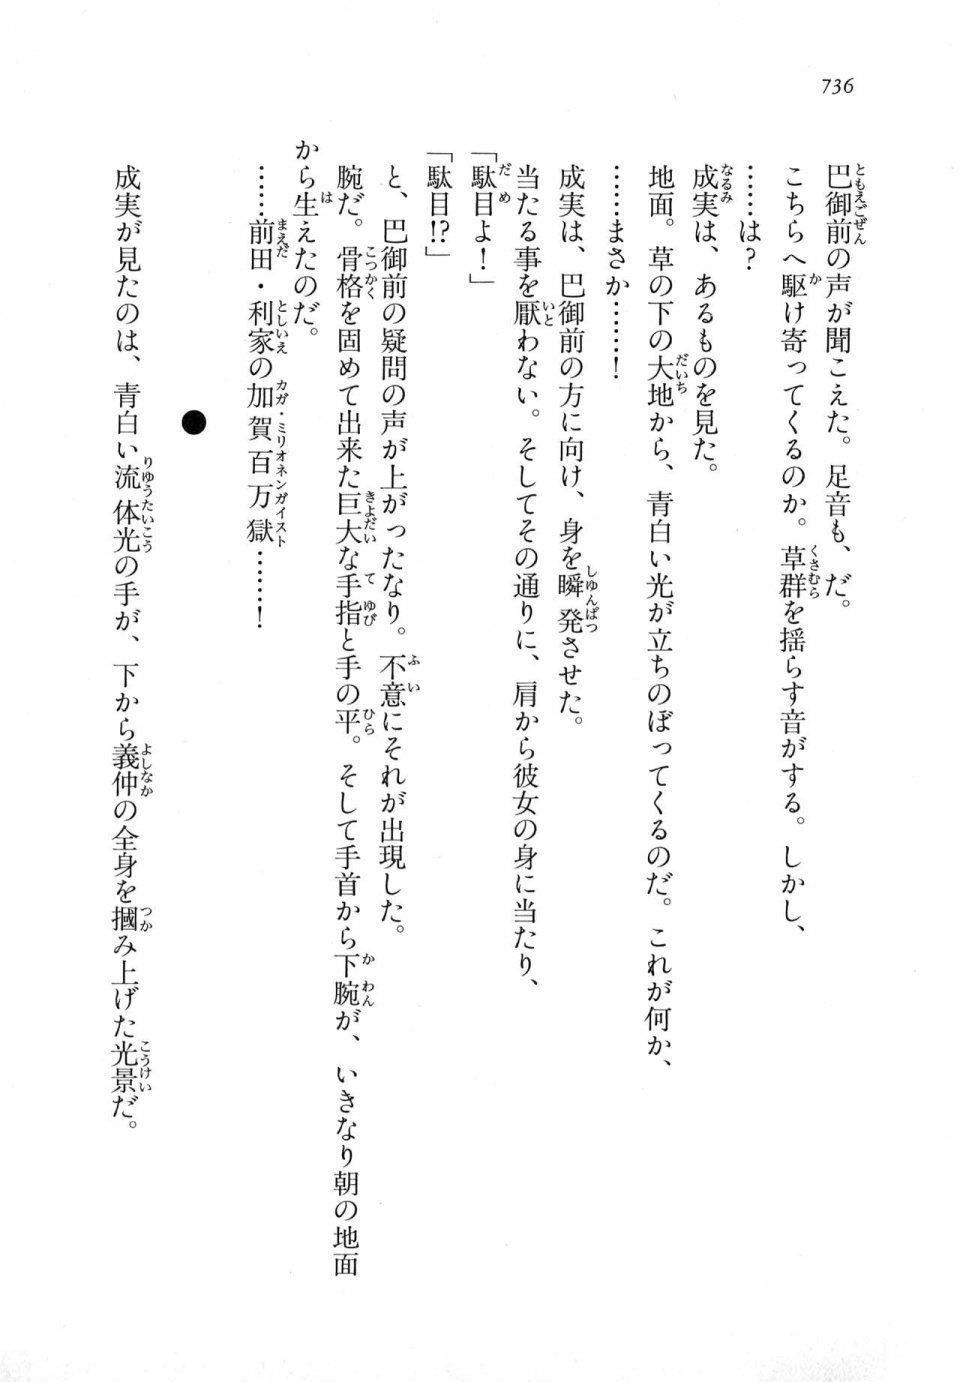 Kyoukai Senjou no Horizon LN Vol 18(7C) Part 2 - Photo #176